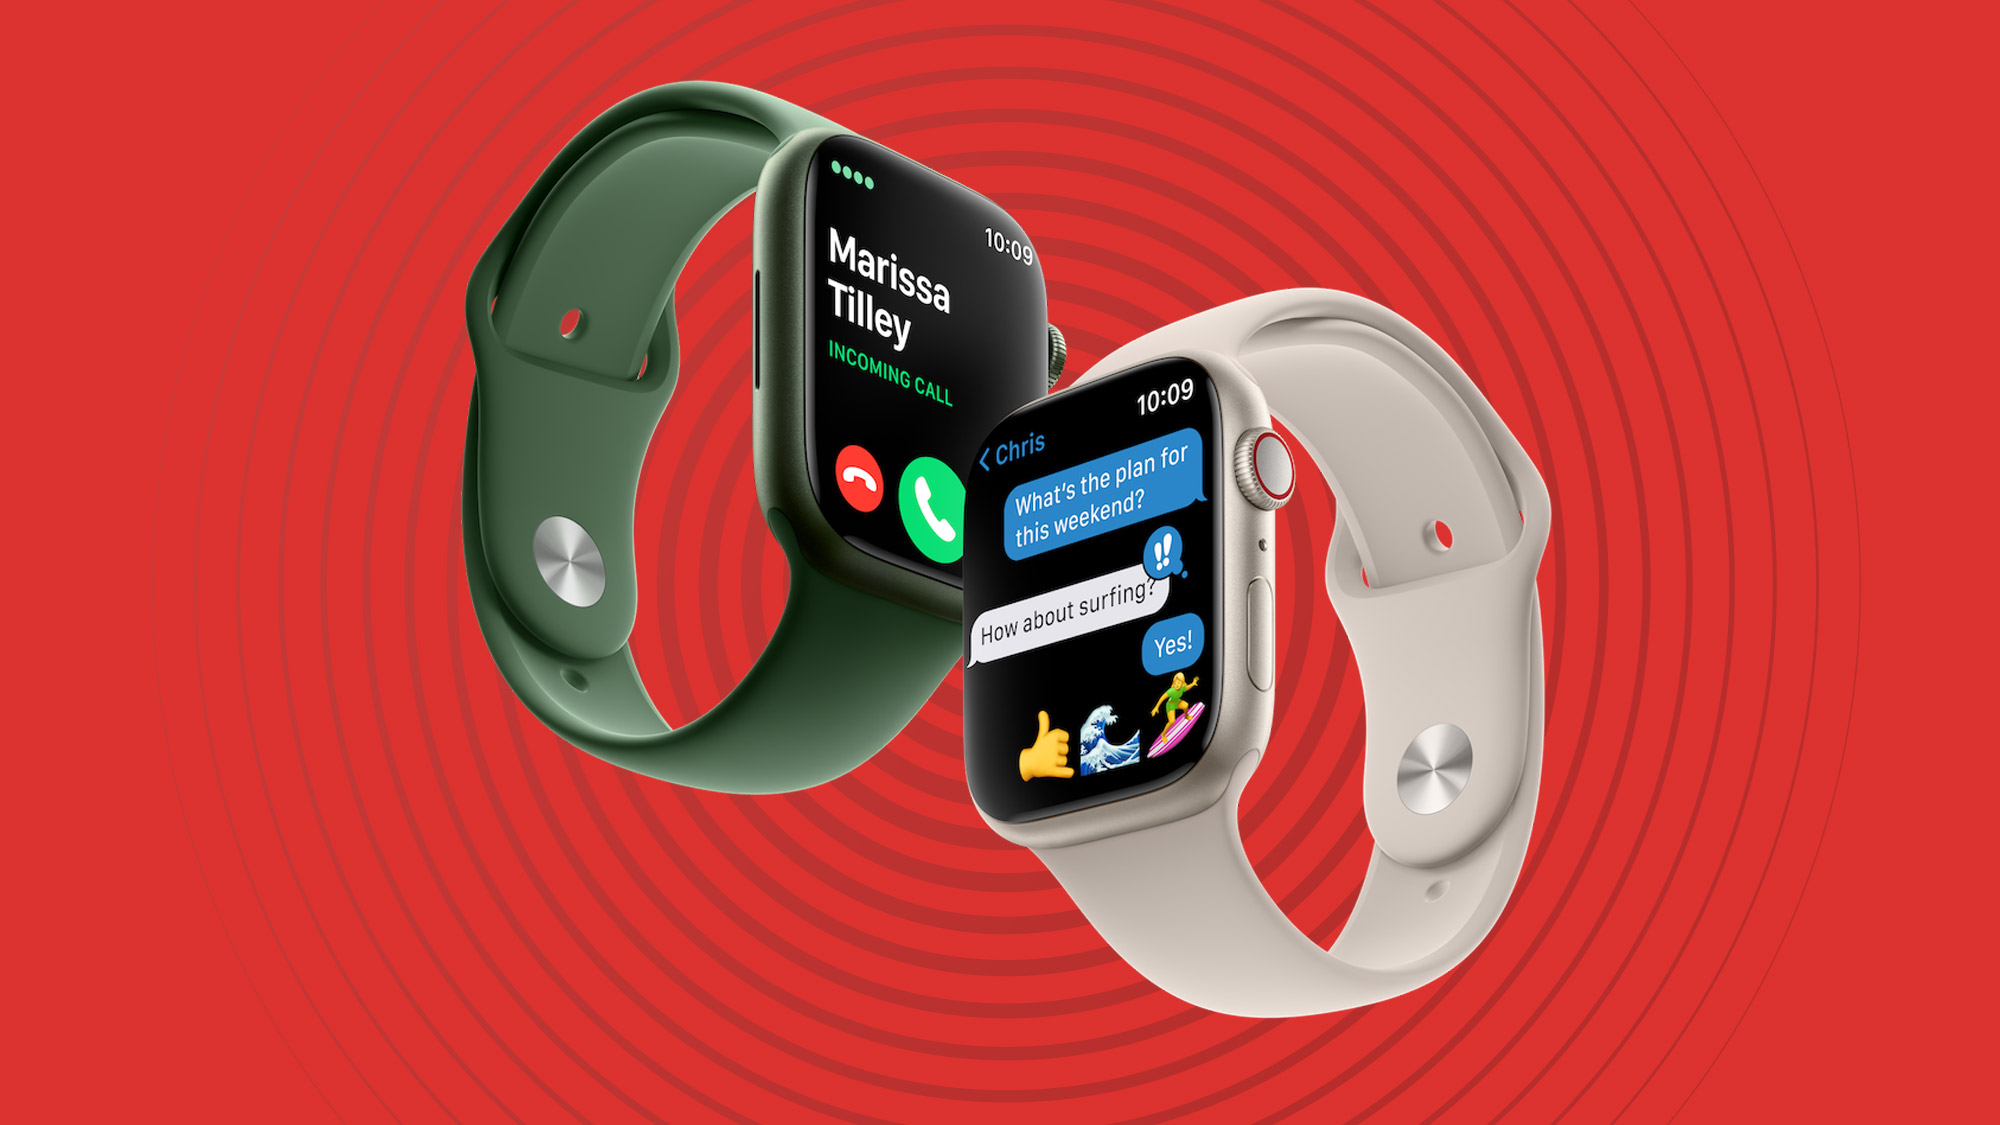 Apple Watch Series 7 orders start Friday, October 8 - Apple